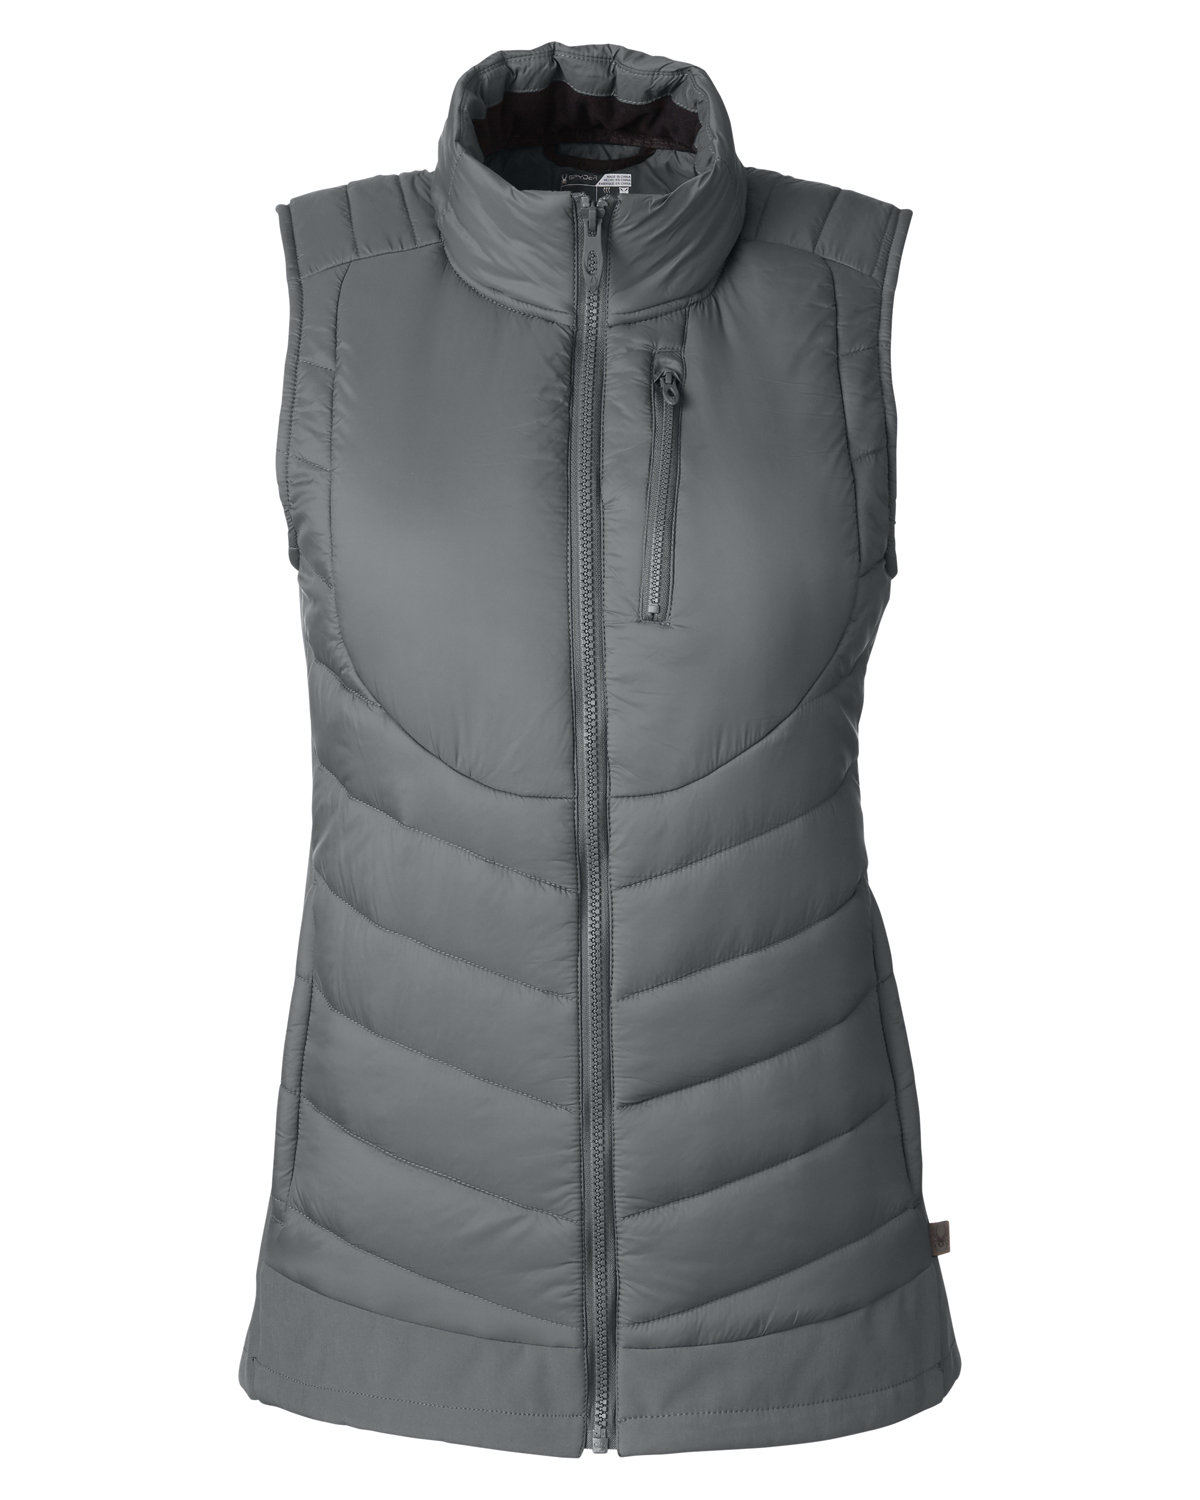 Picture of Spyder Women's Challenger Vest